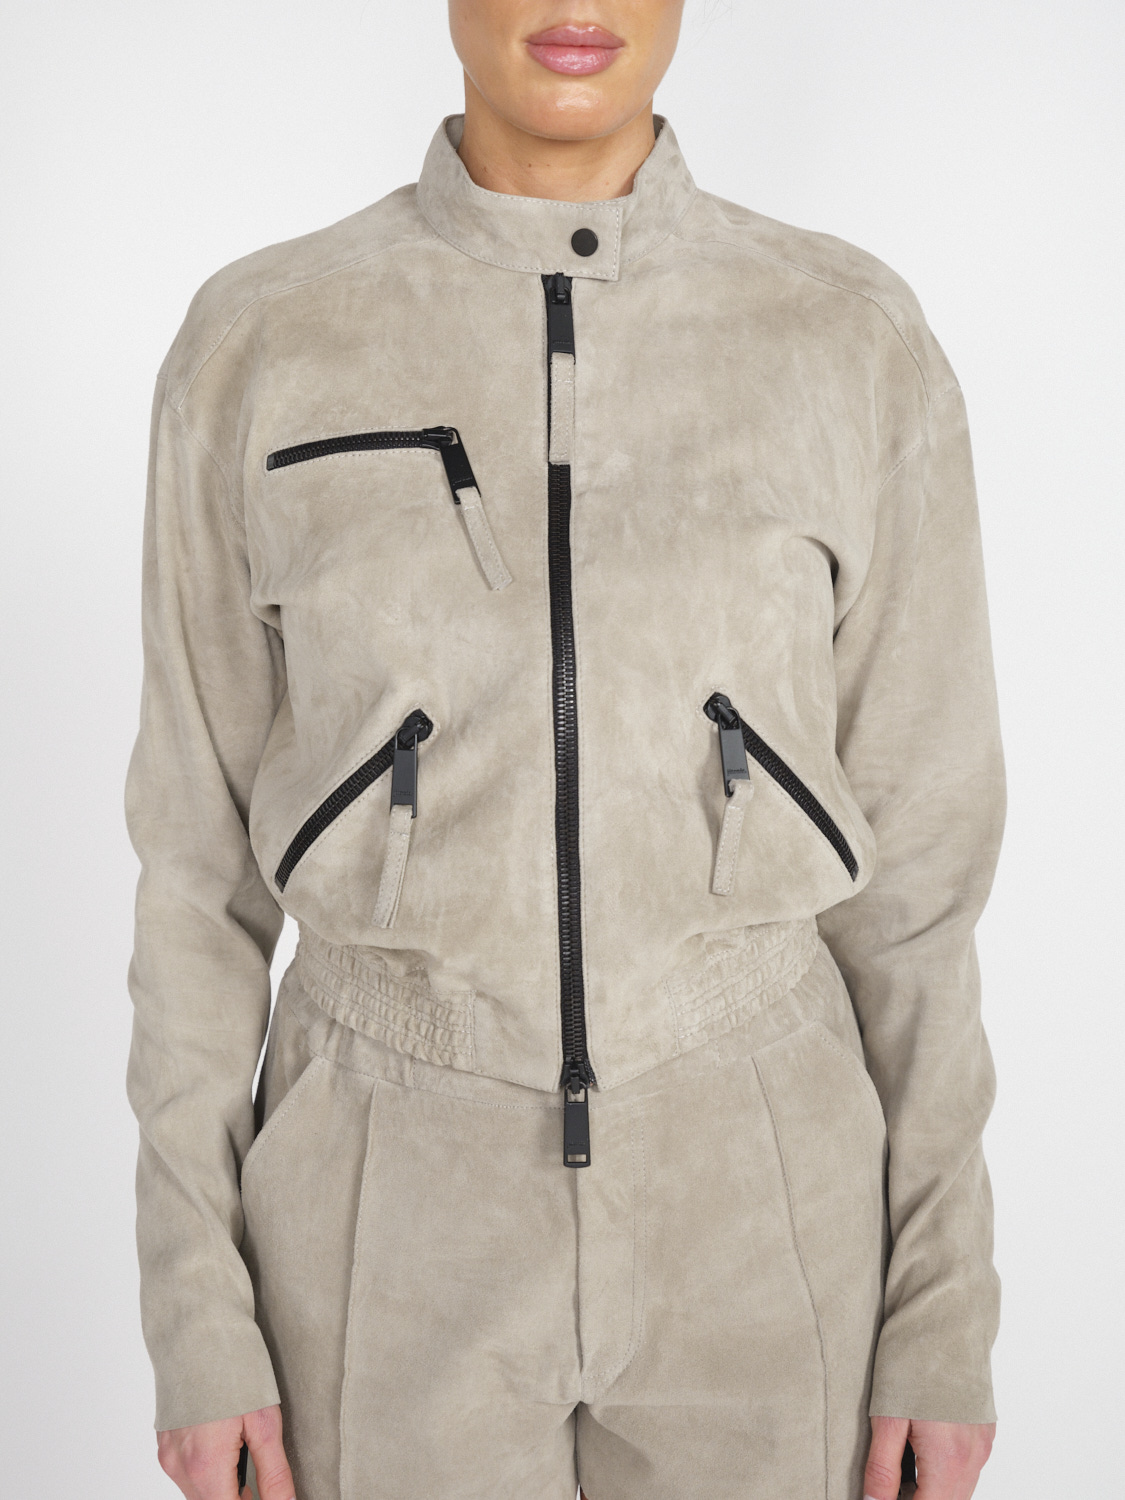 jitrois Blof - Stretchy suede jacket with black zip-details  beige 34